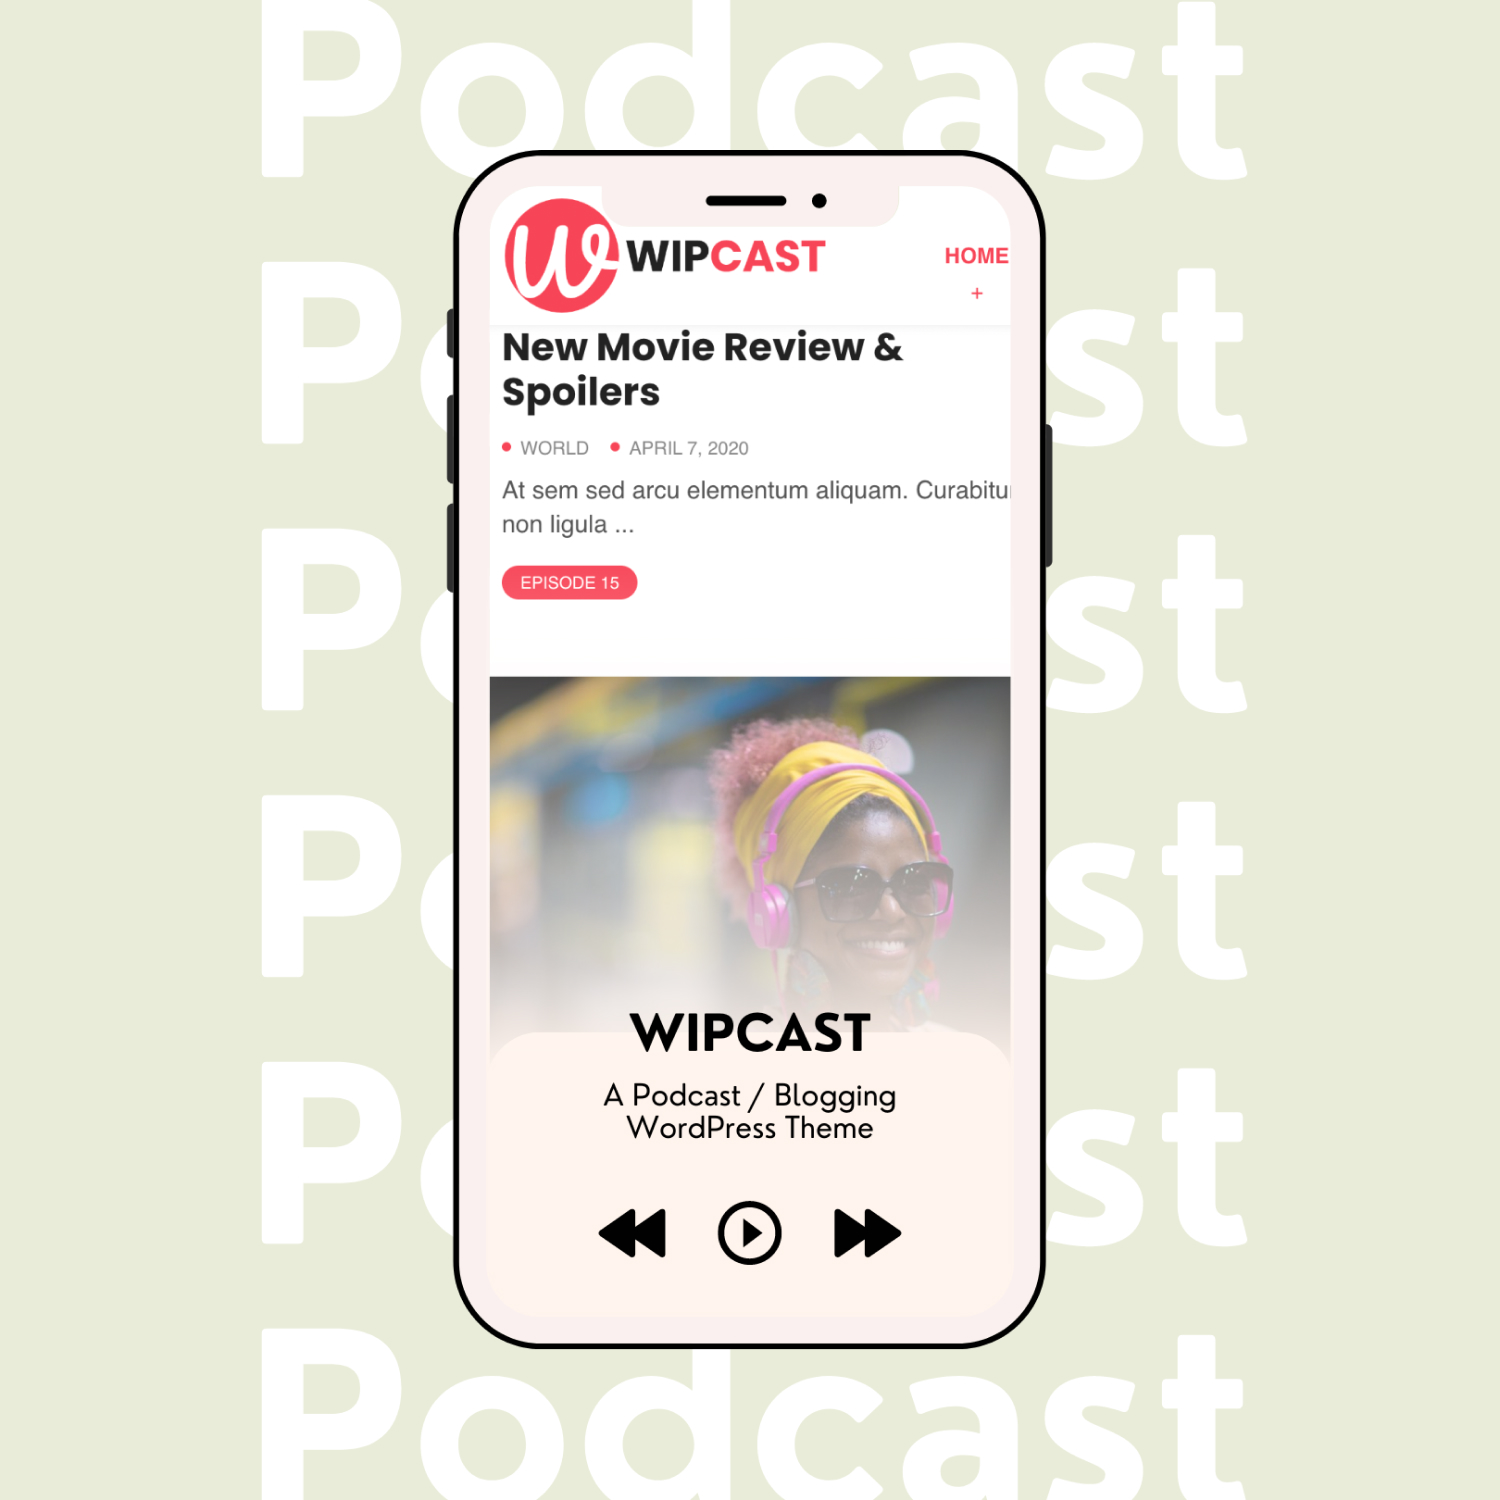 WipCast - A Podcast / Blogging WordPress Theme.